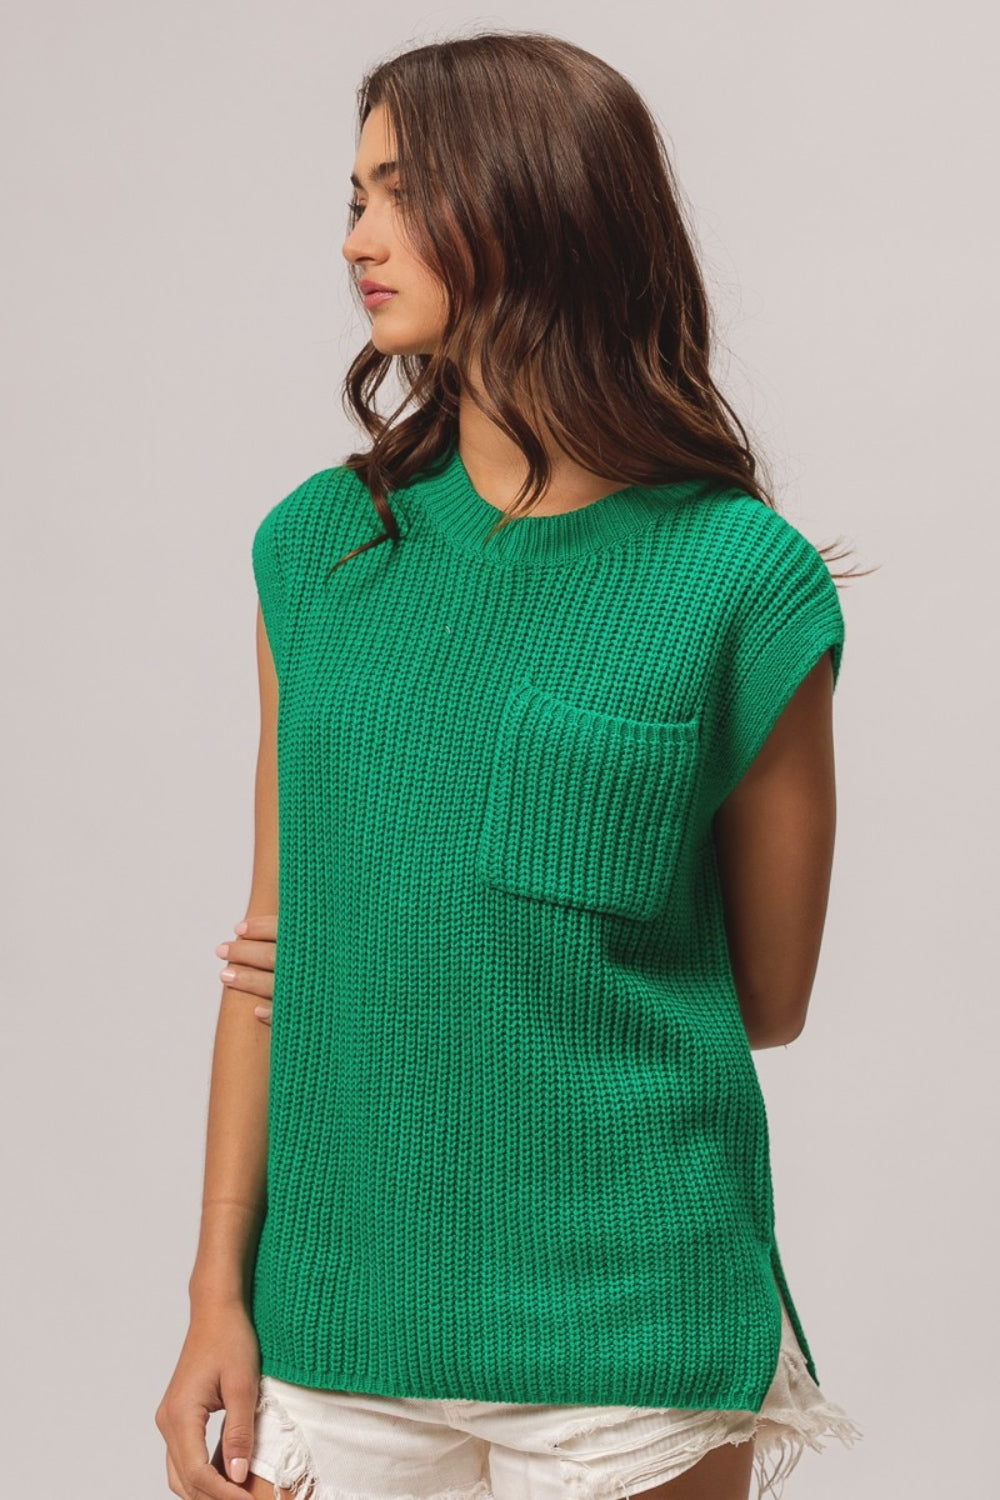 BiBi Patch Pocket Cap Sleeve Sweater Top - Tigbul's Variety Fashion Shop